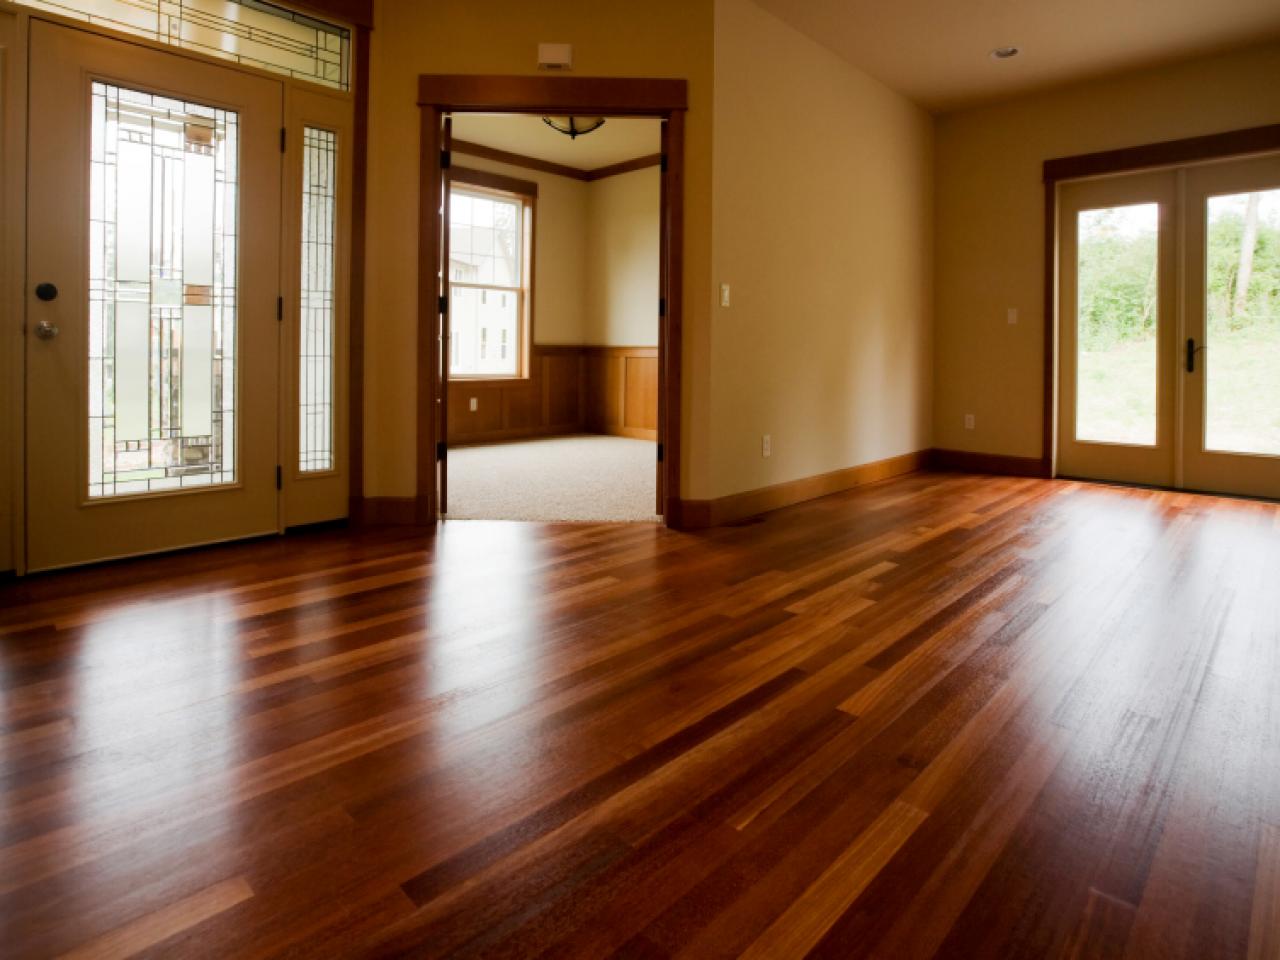 Cleaning Tile Wood And Vinyl Floors, Hardwood Floor Cleaning Companies